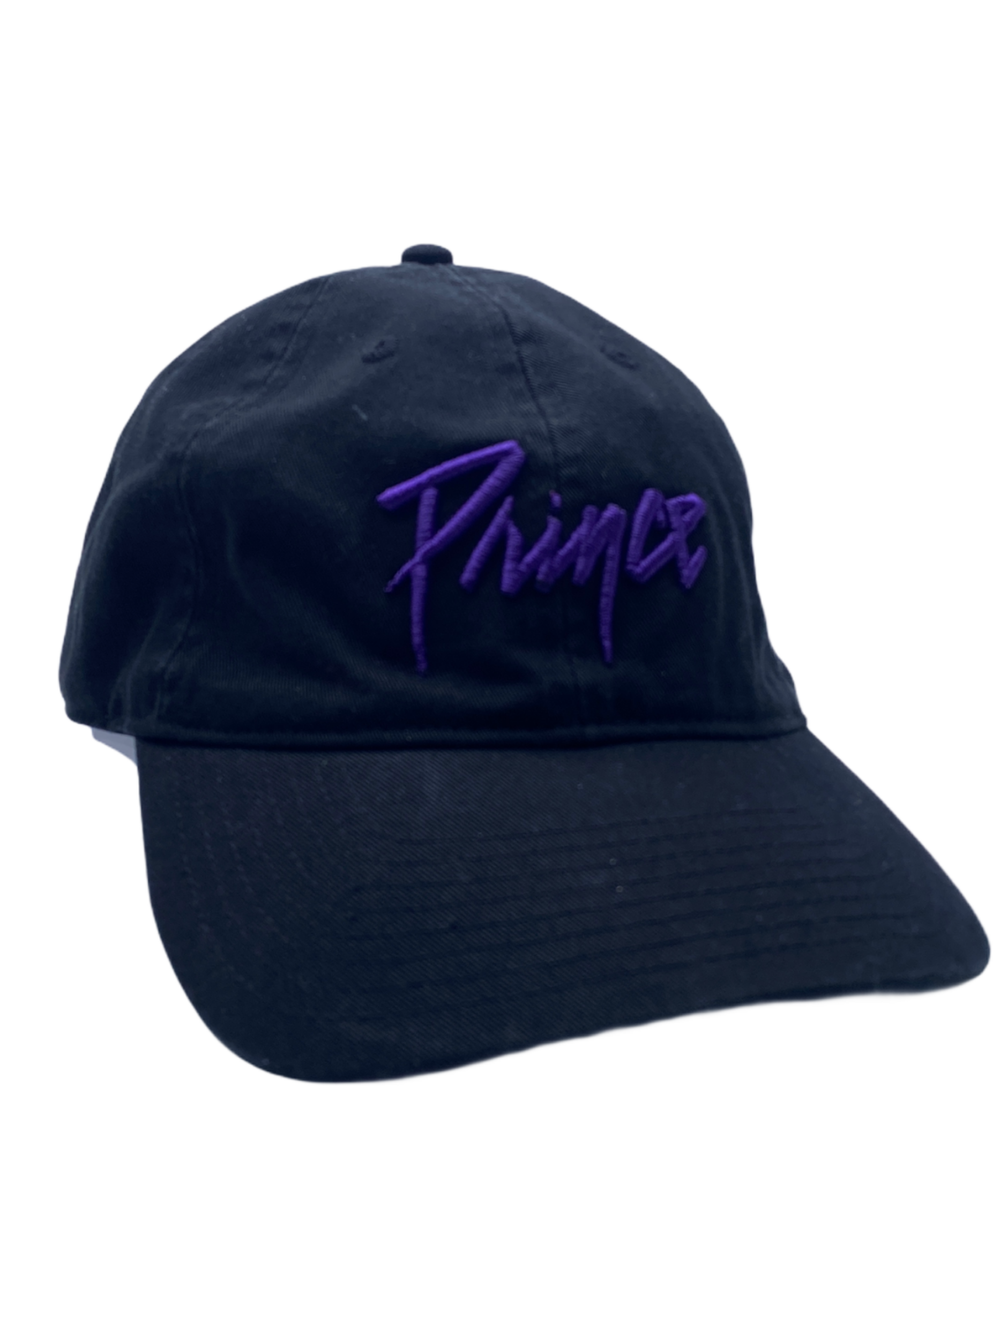 Prince – & The Revolution – Purple Rain Name Logo Official Peak Cap Embroidery Chunky